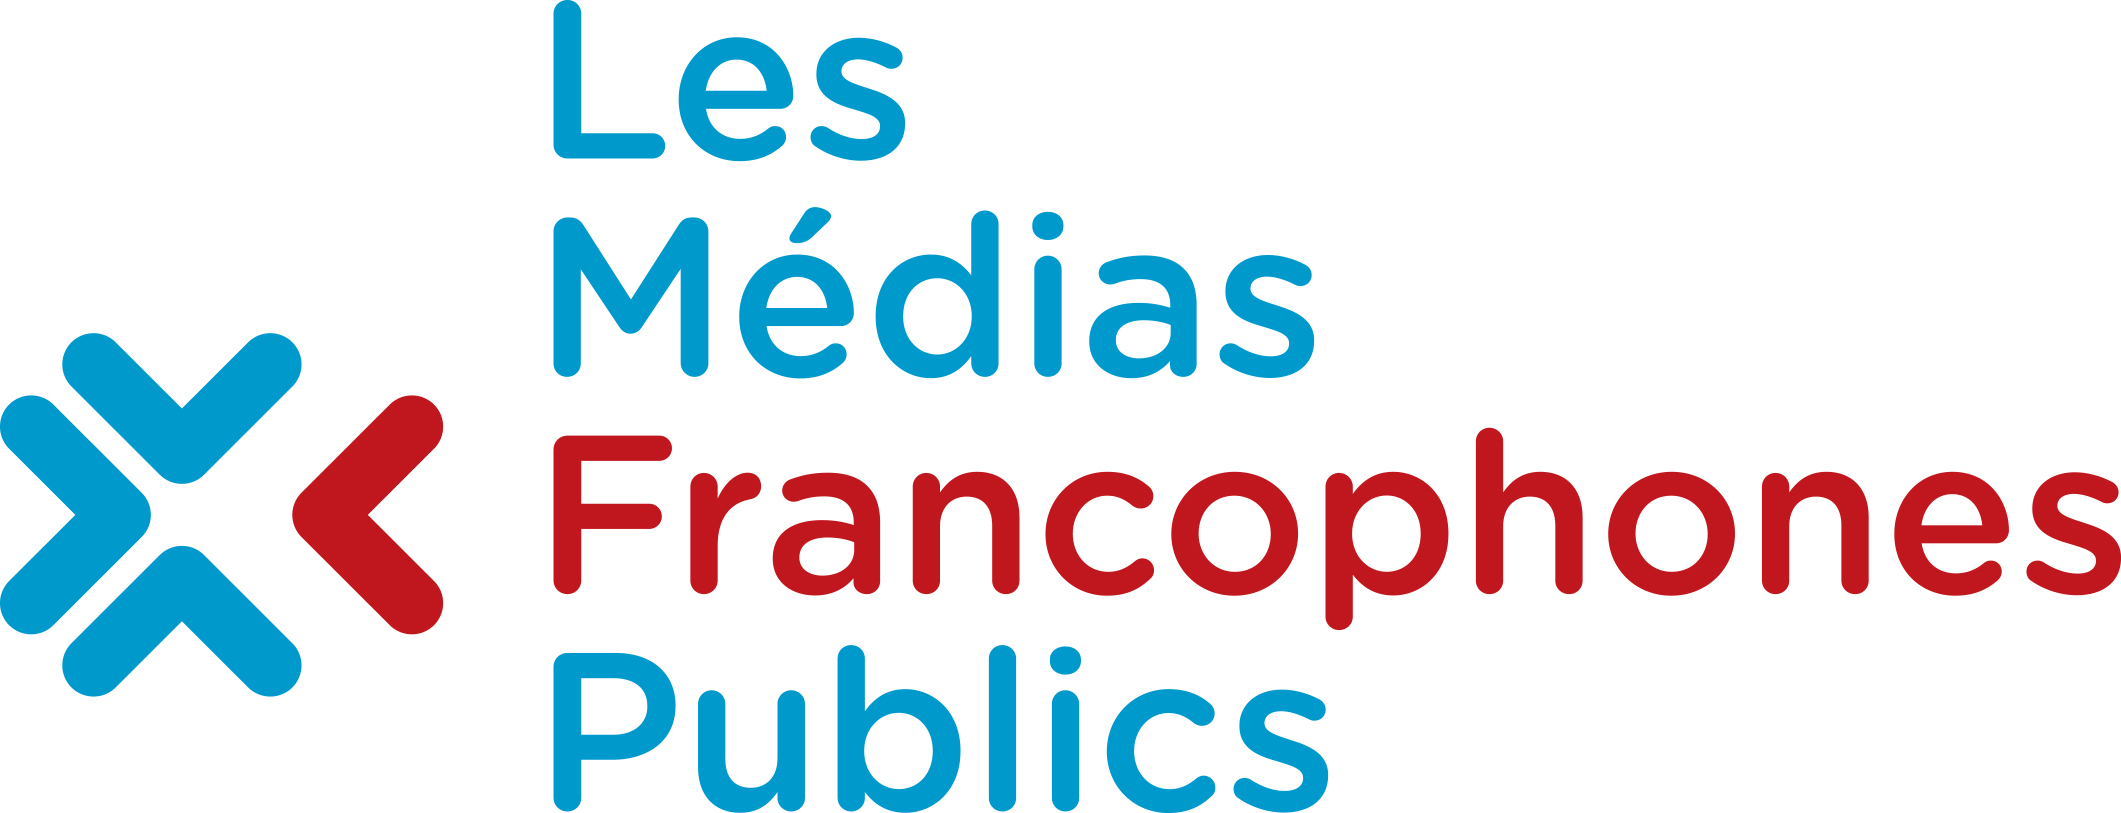 LesMediasFrancophonesPublics-Logo.jpg